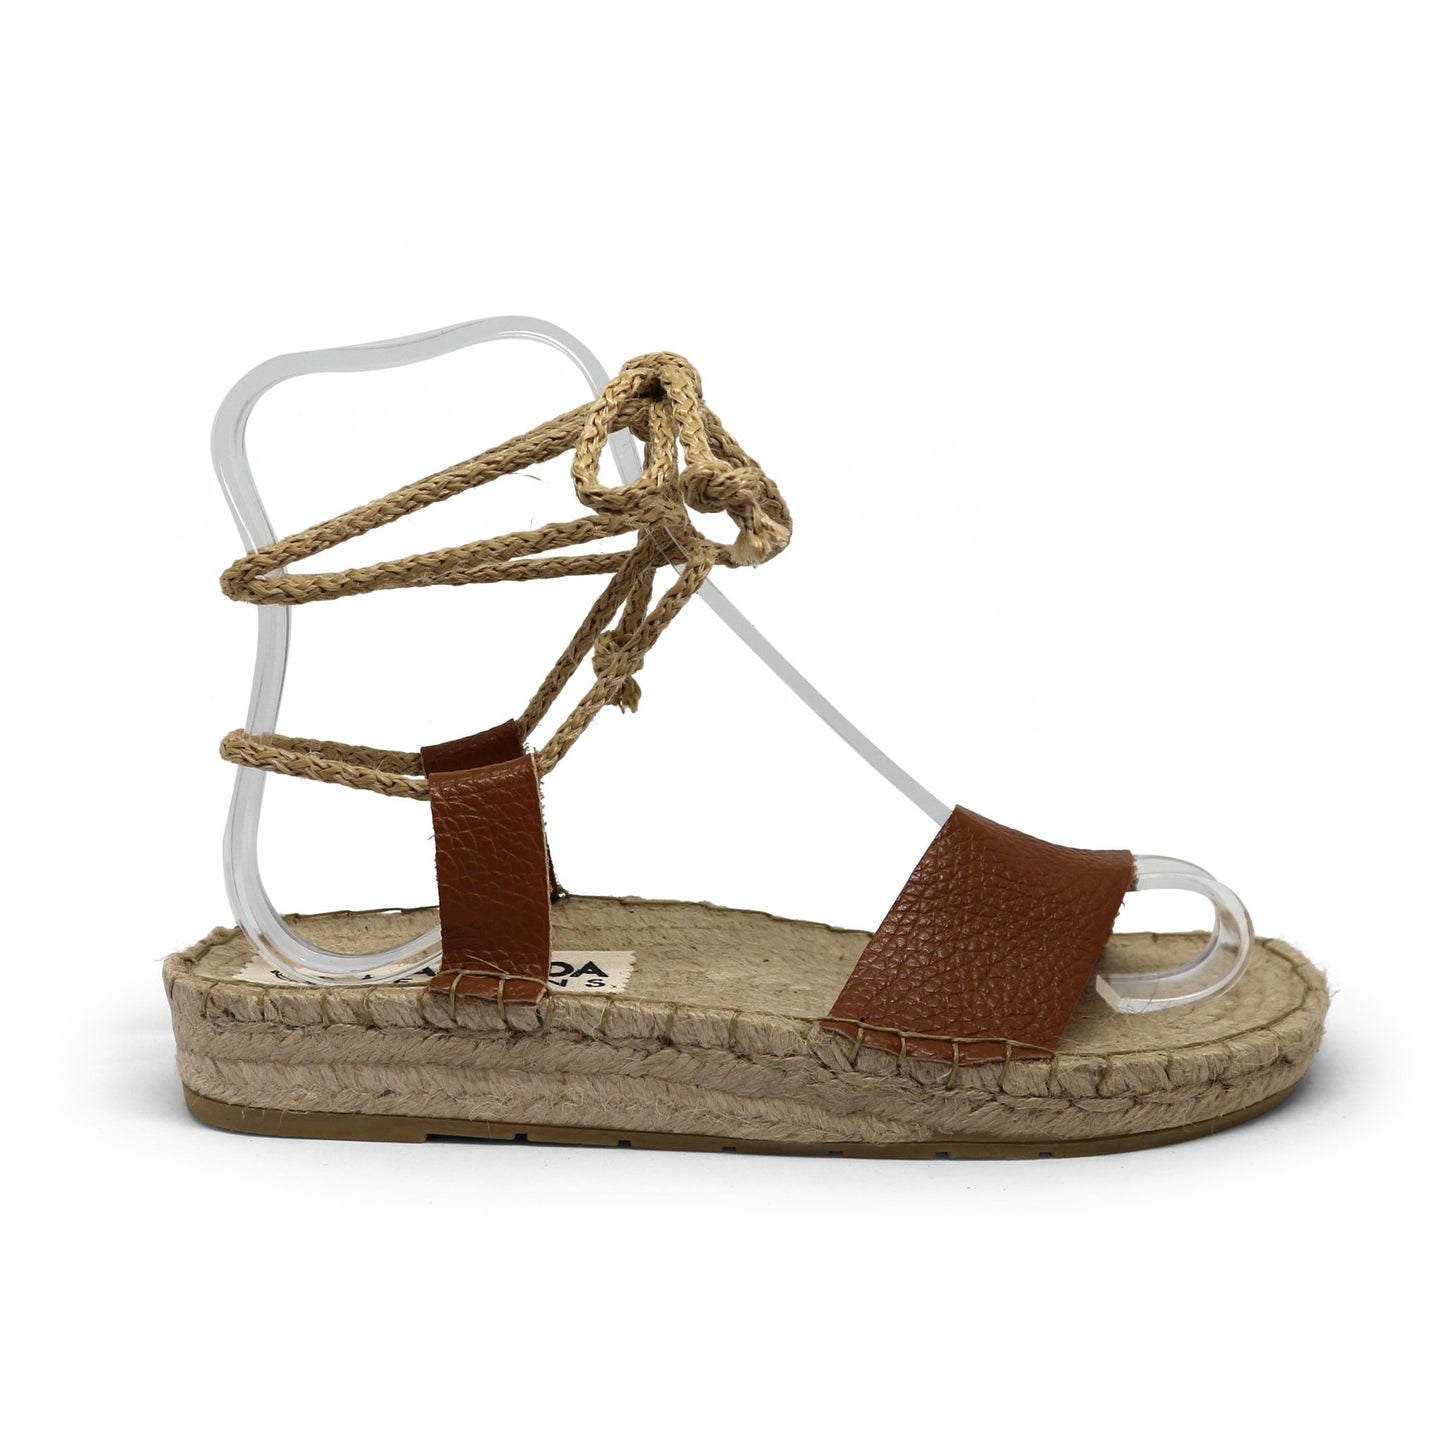 Comfort Lace Up Espadrilles Sandals - Tan - Maslinda Designs